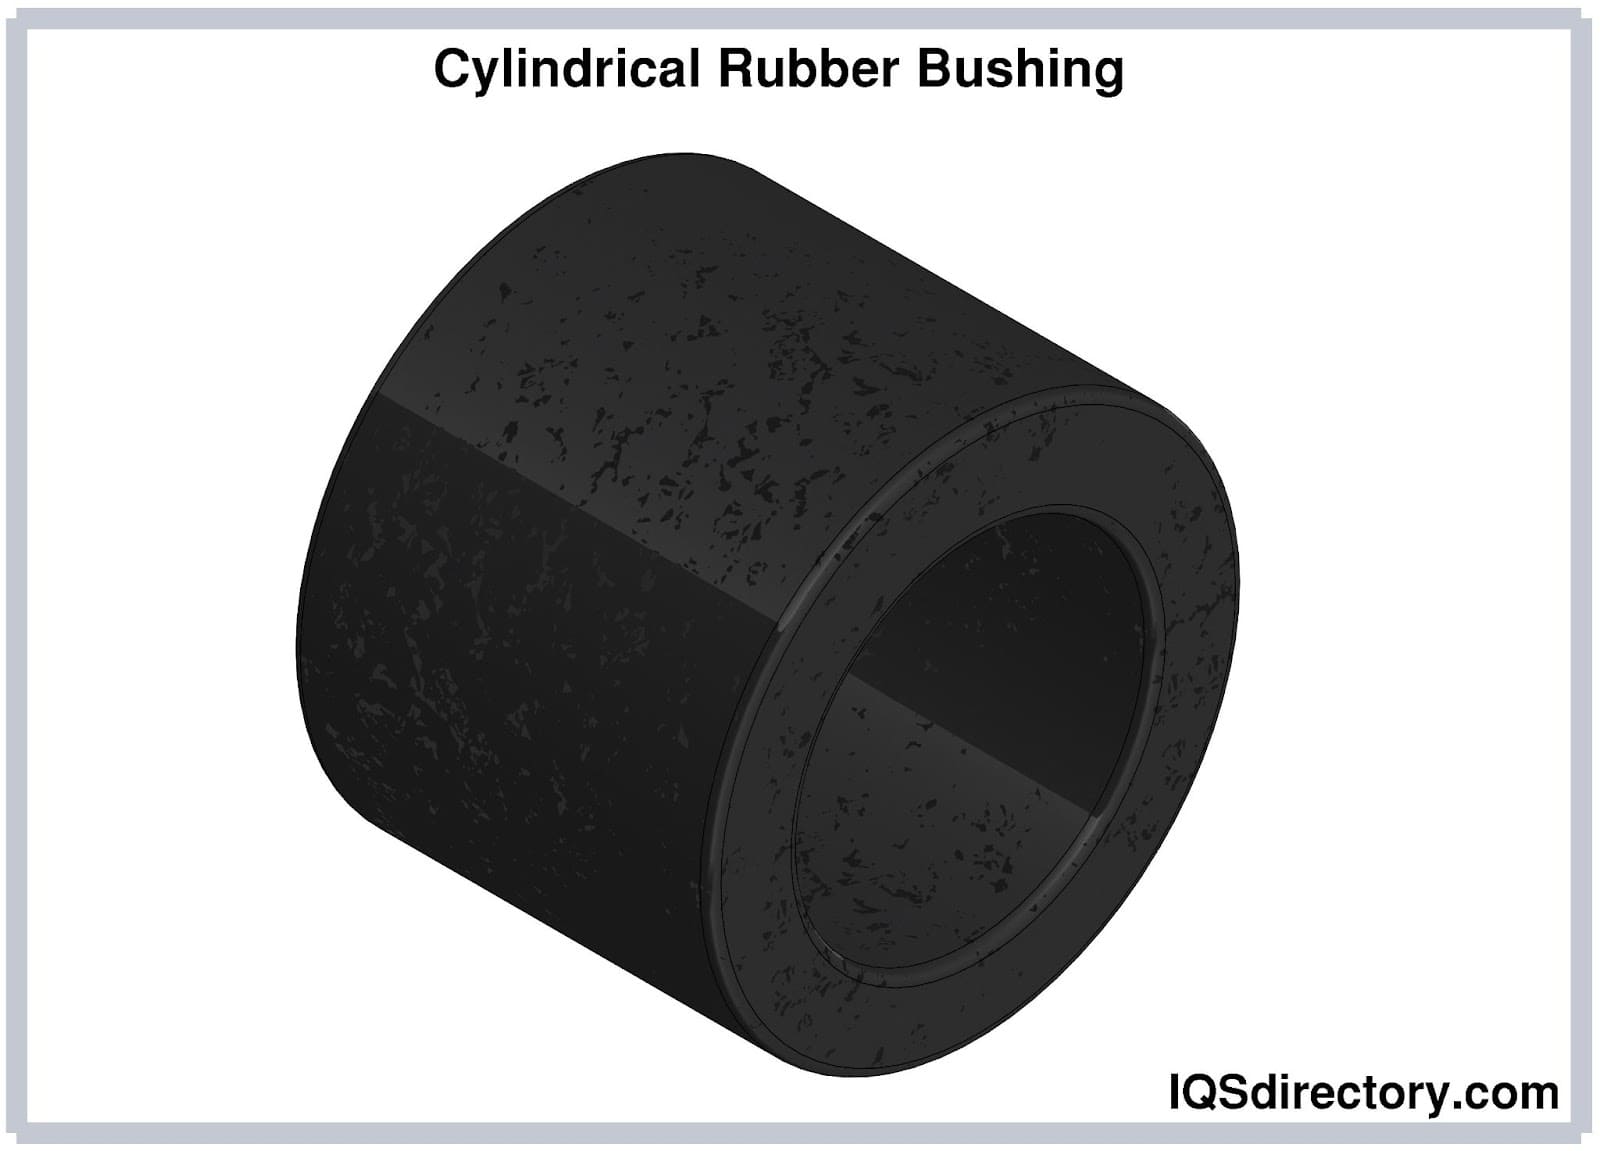 Cylindrical Rubber Bushing